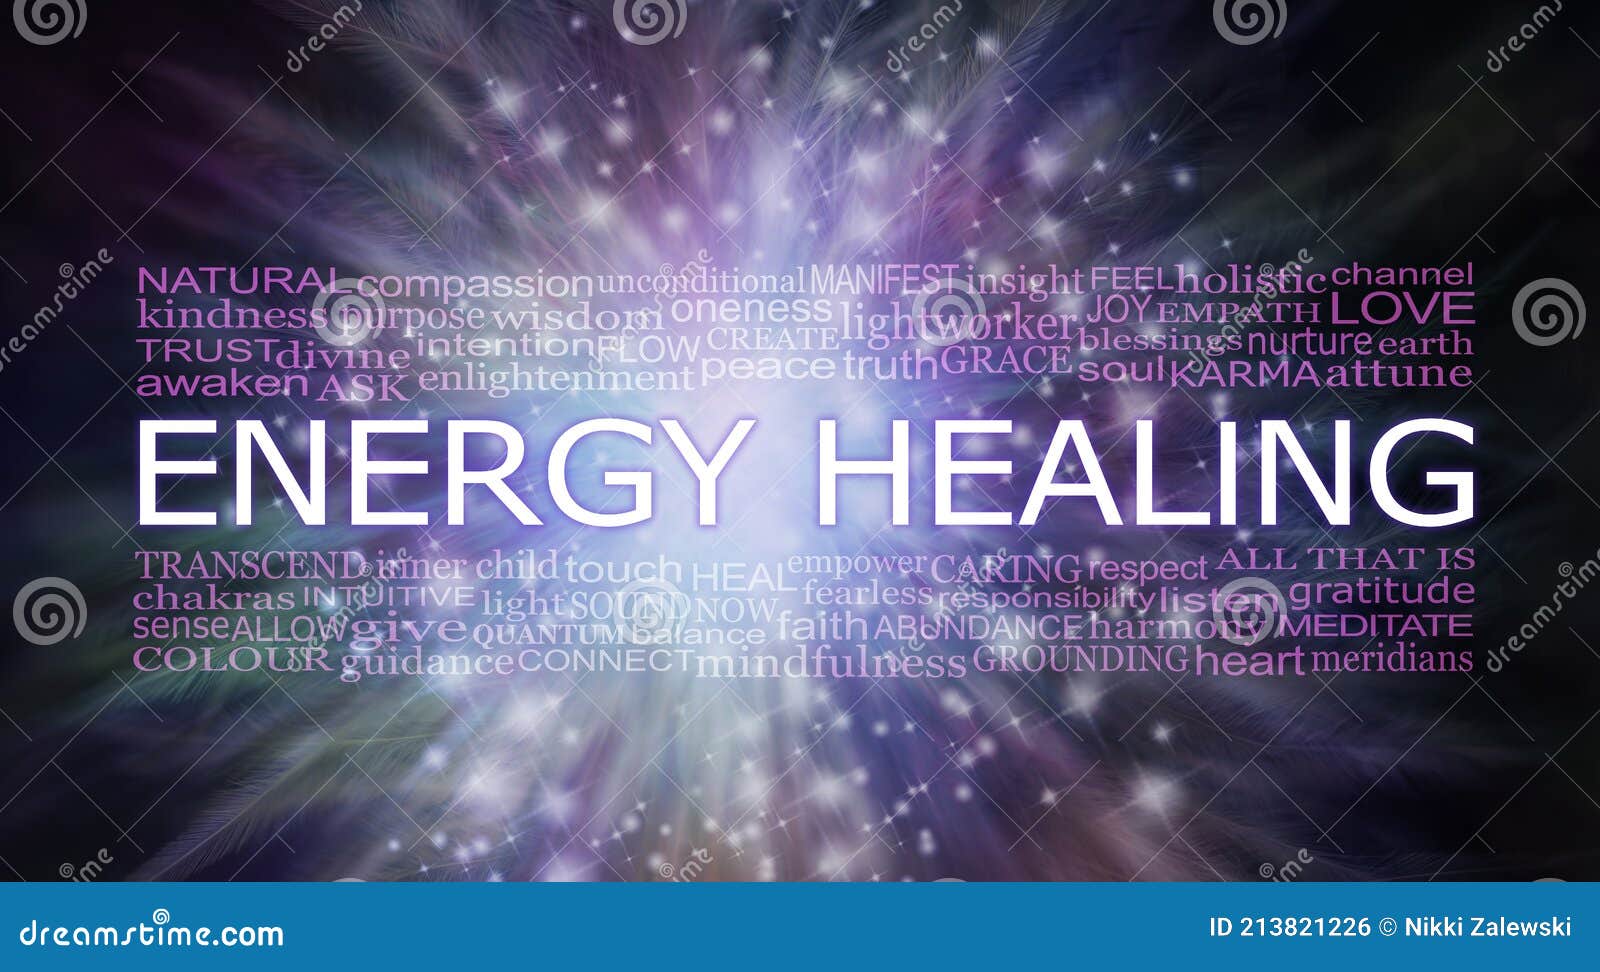 ethereal energy healing word cloud banner